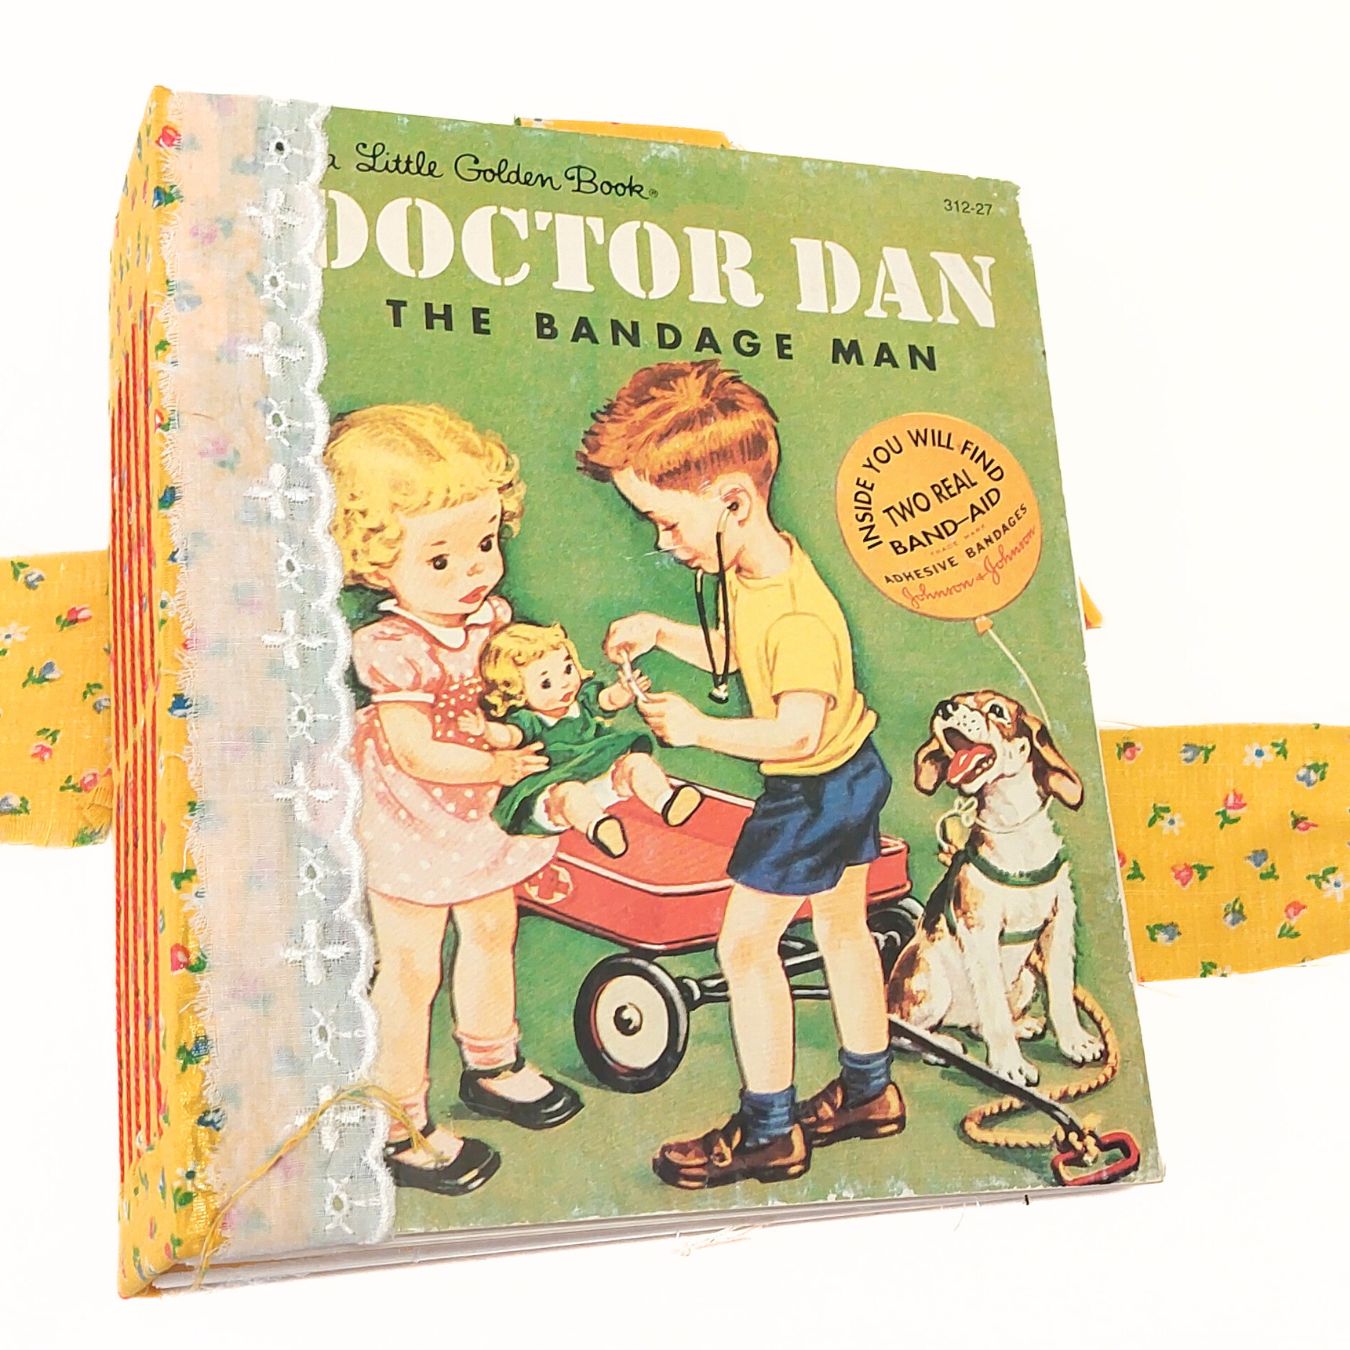 Dr. Dan the Band-aid Man (LGB) Hardcover Junk Journal